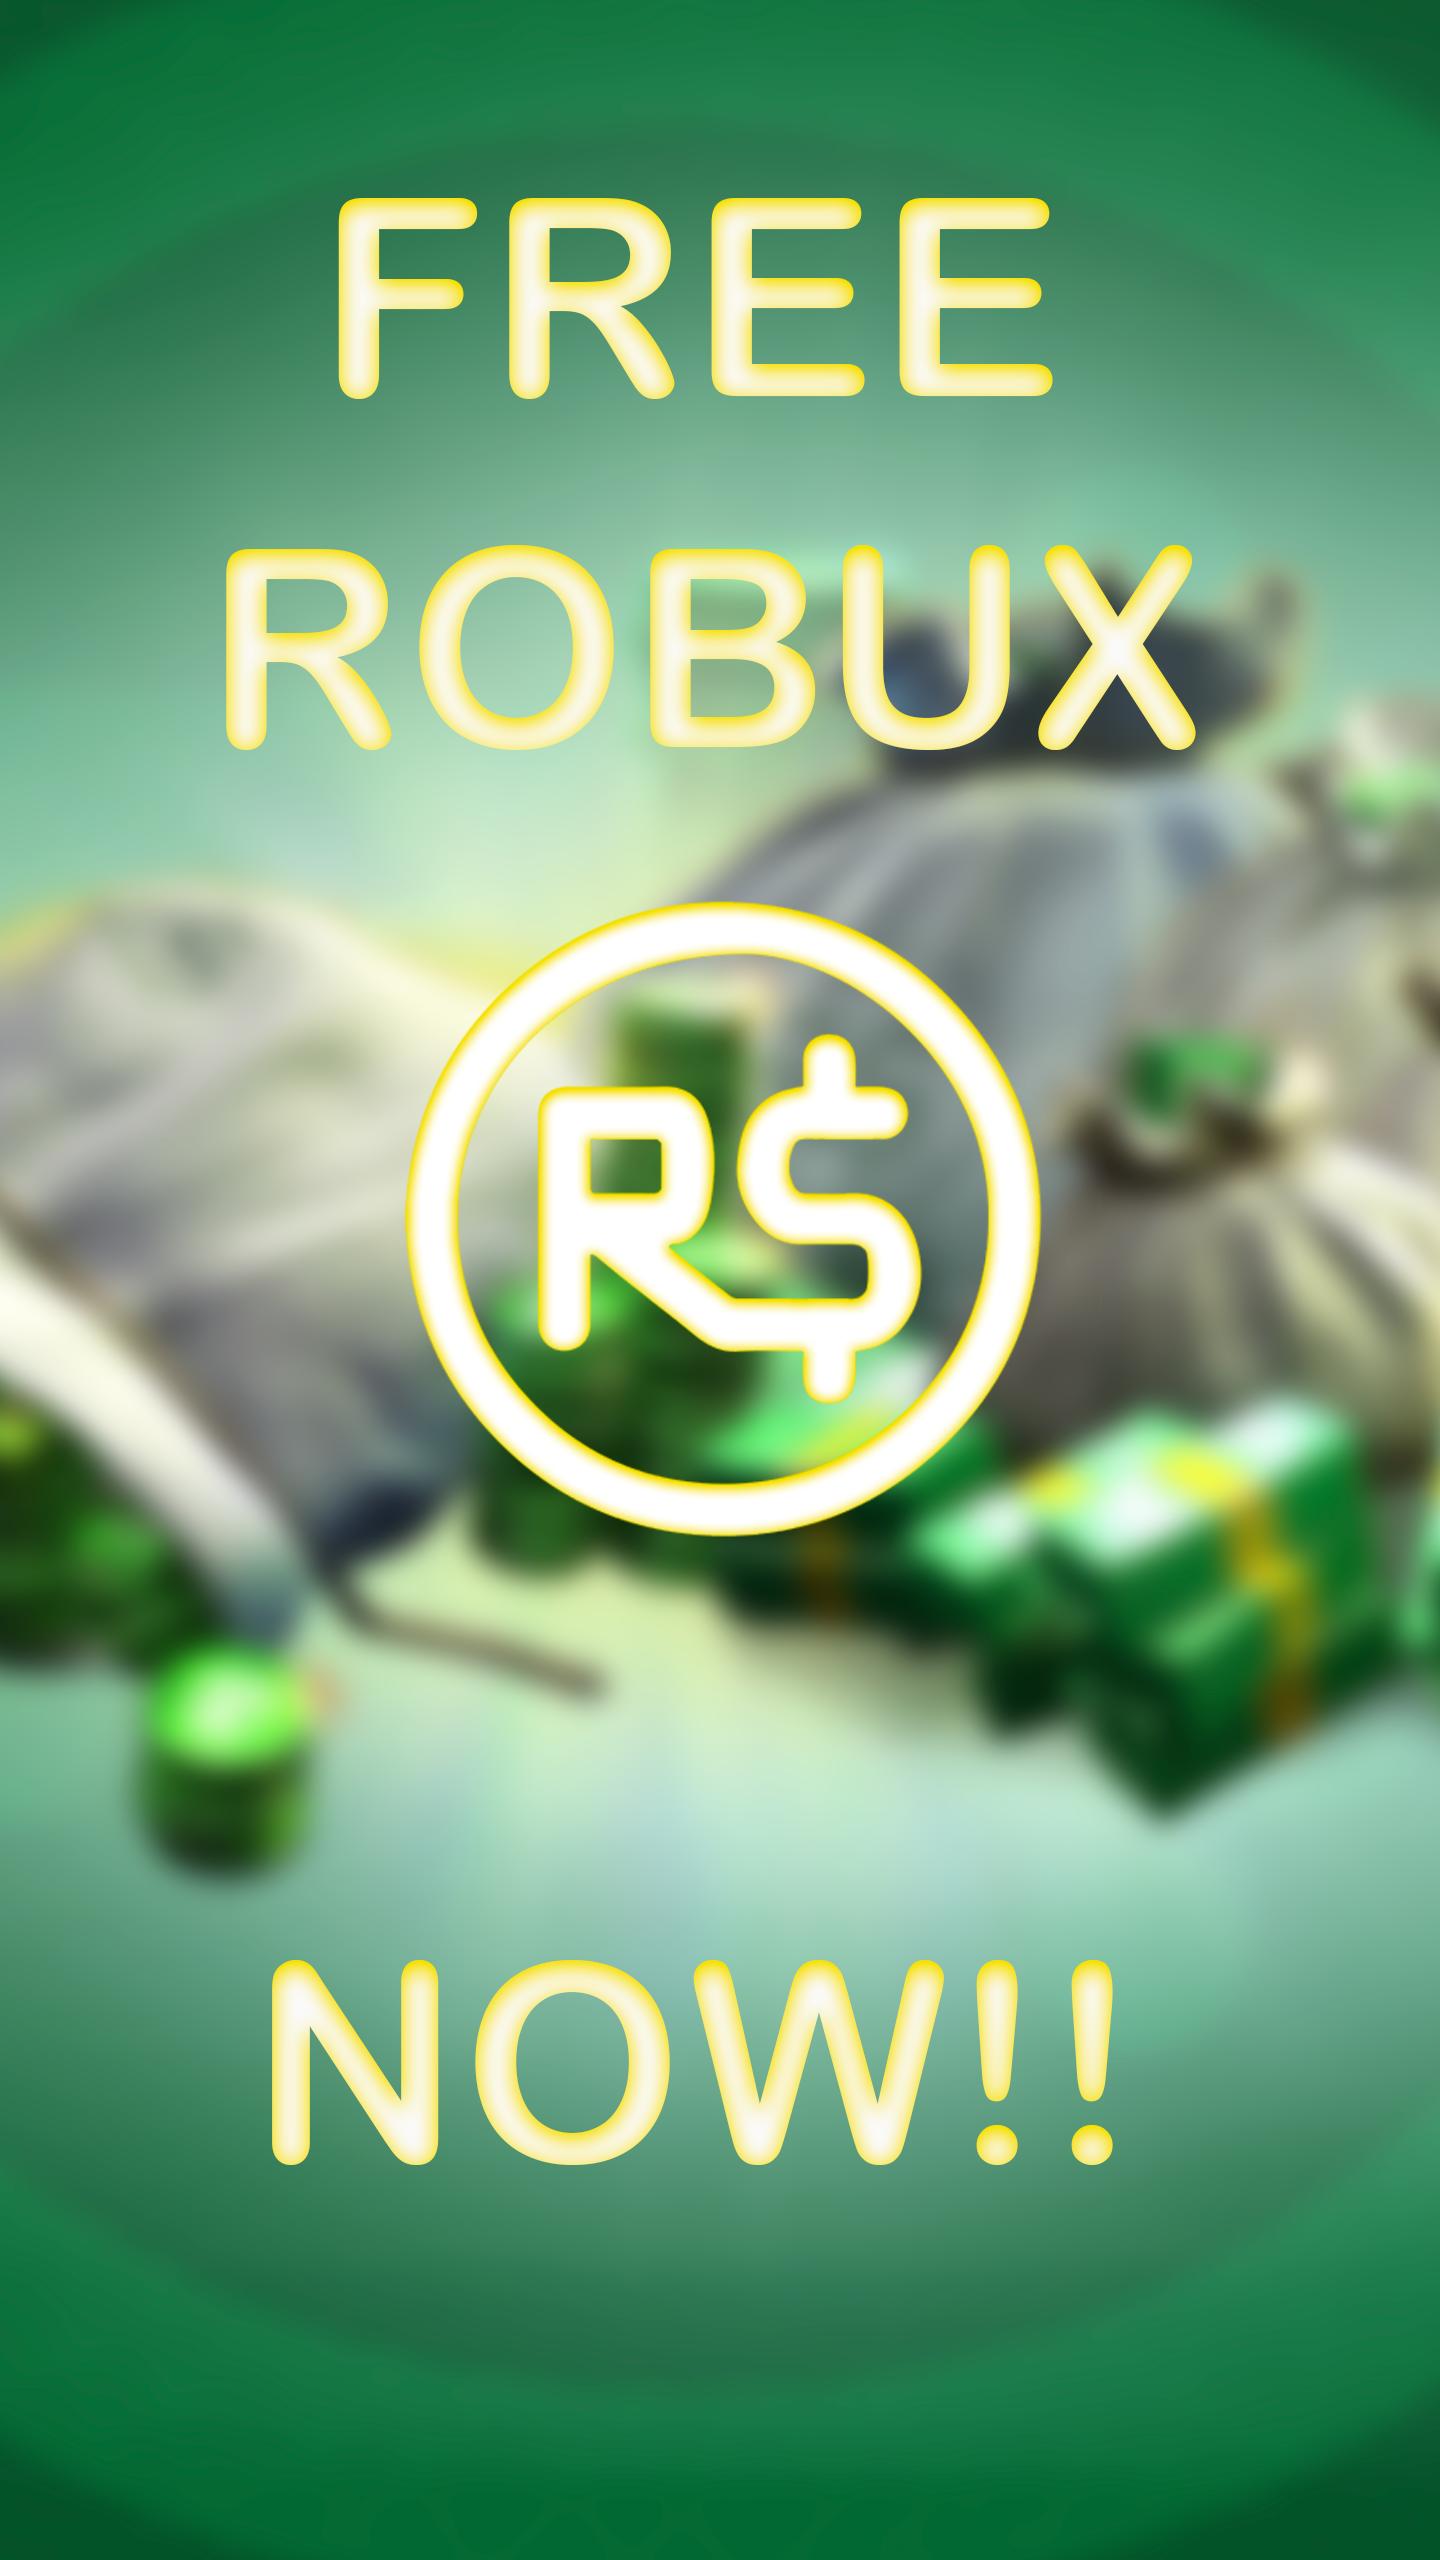 Robux Gratis 2019 Como Ganar Robux Gratis Ahora For Android Apk Download - como tener robux sin verificacion